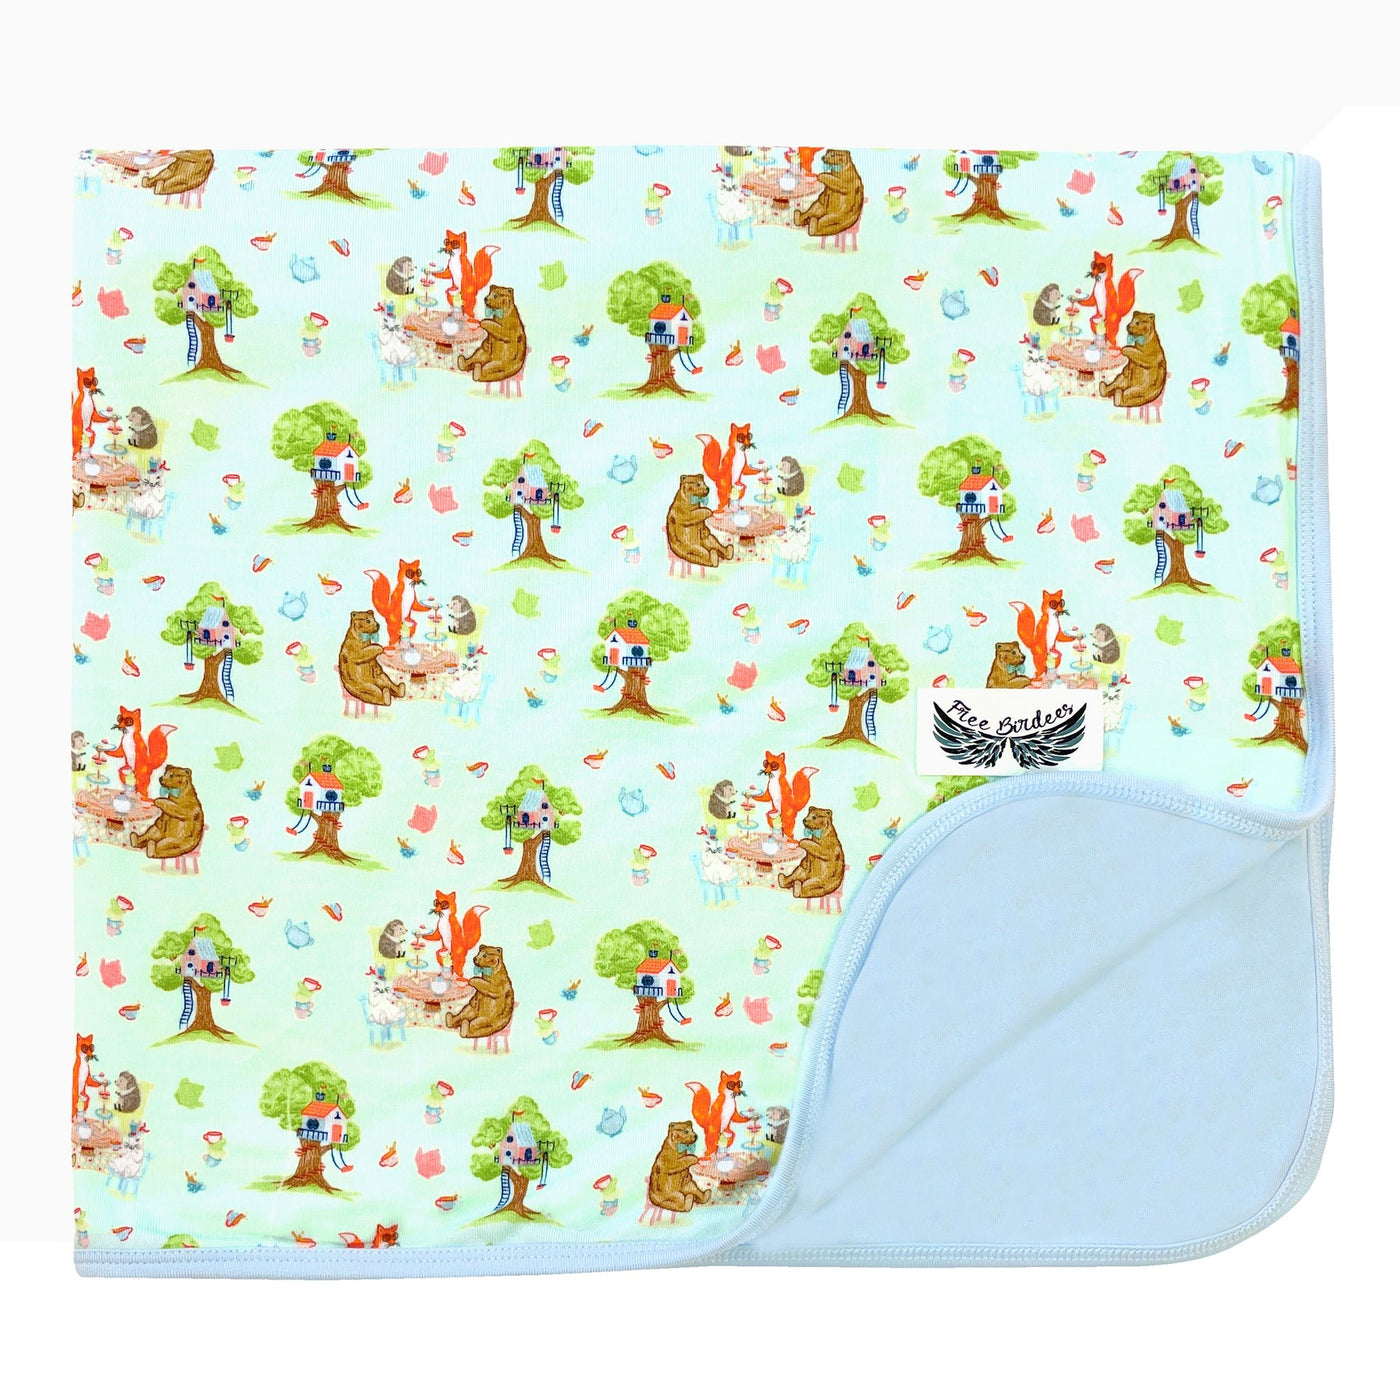 Tree House Tea Party Toddler Blanket - Free Birdees